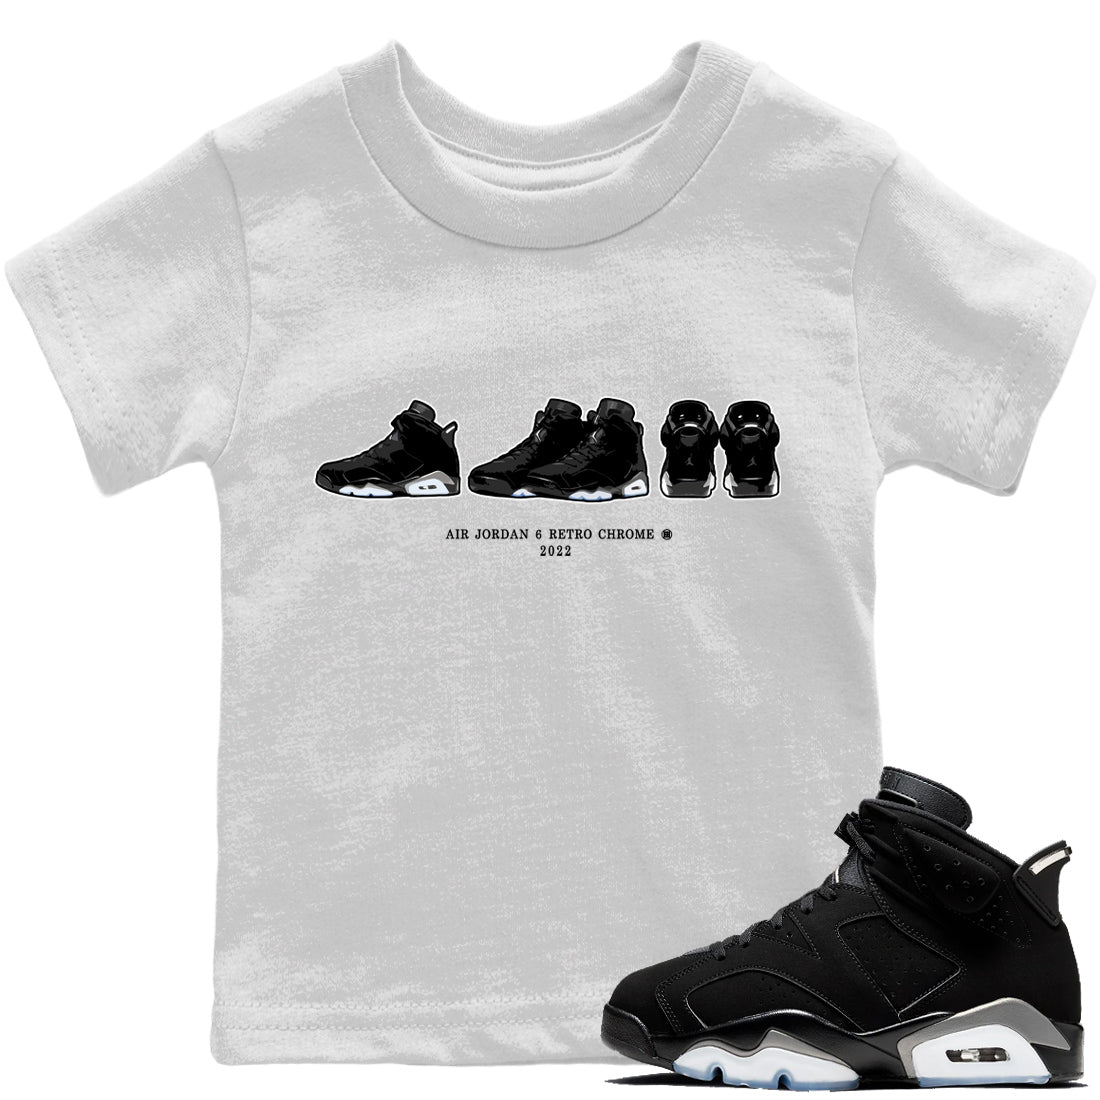 Jordan 6 Chrome Sneaker Match Tees Air Jordan 6 Prelude Sneaker Tees Jordan 6 Chrome Sneaker Release Tees Kids Shirts